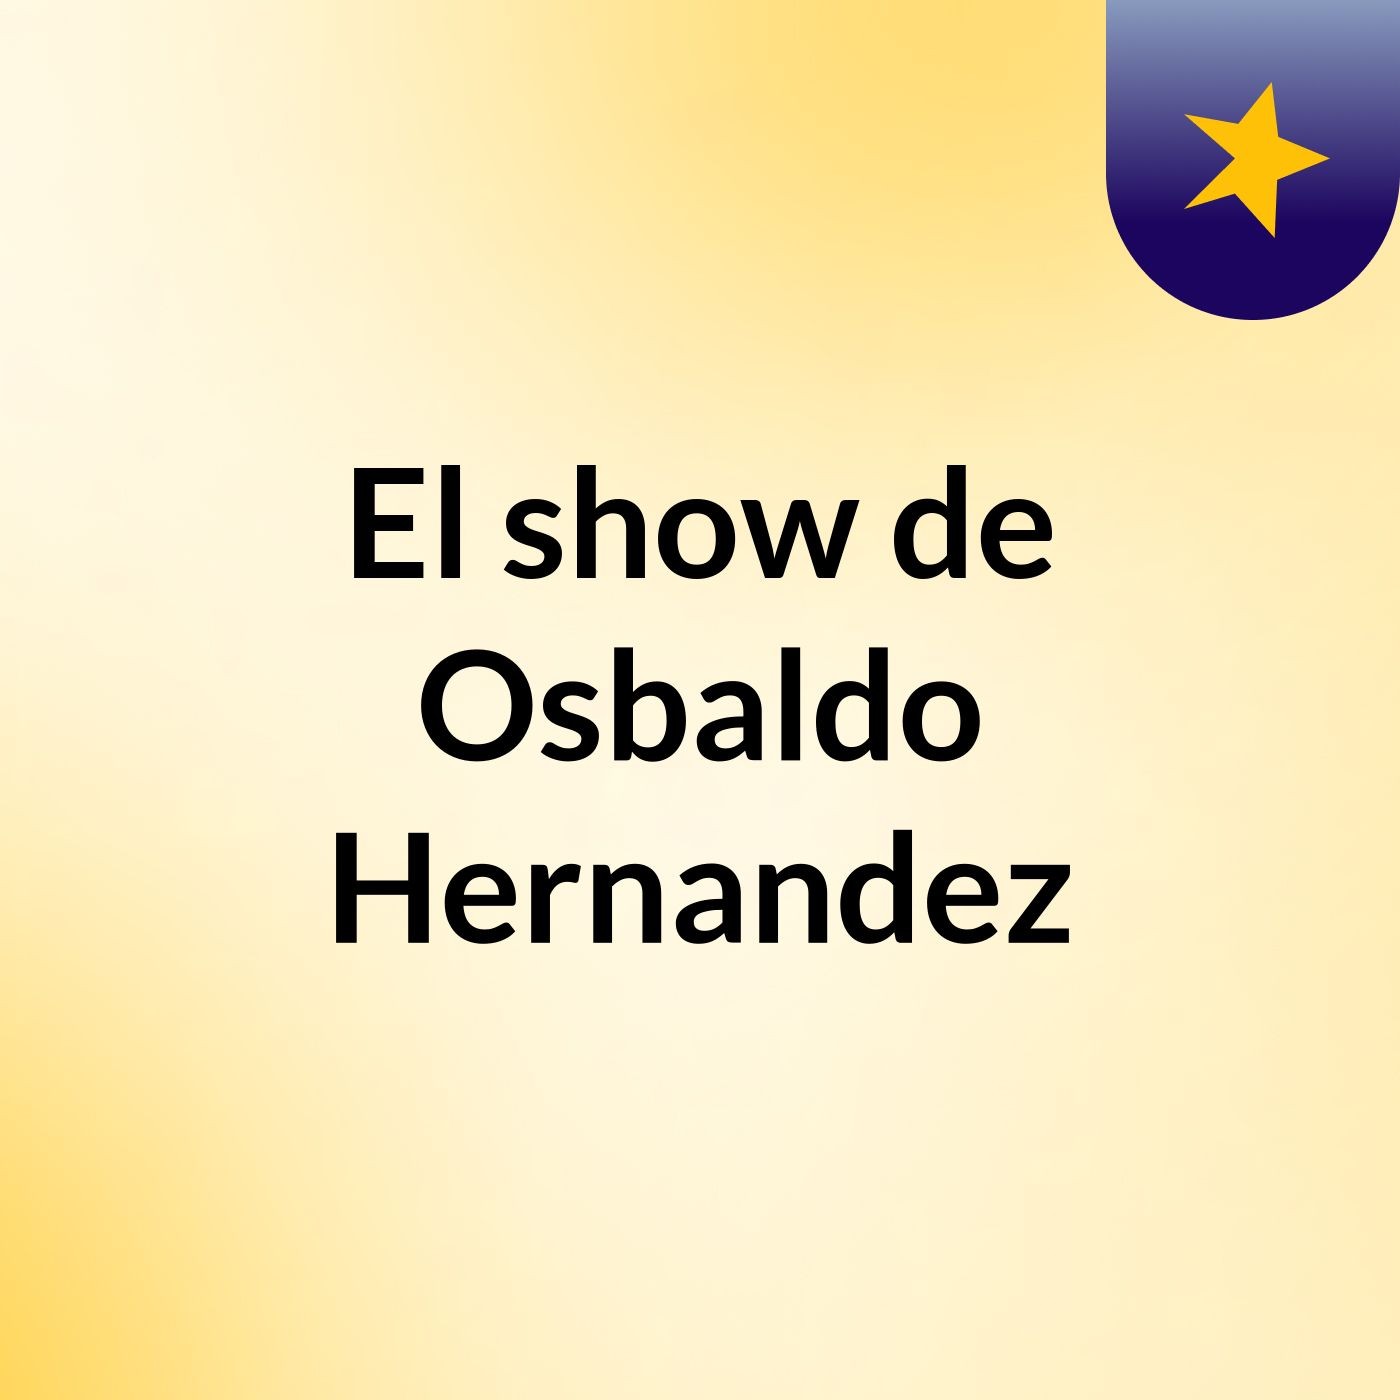 El show de Osbaldo Hernandez